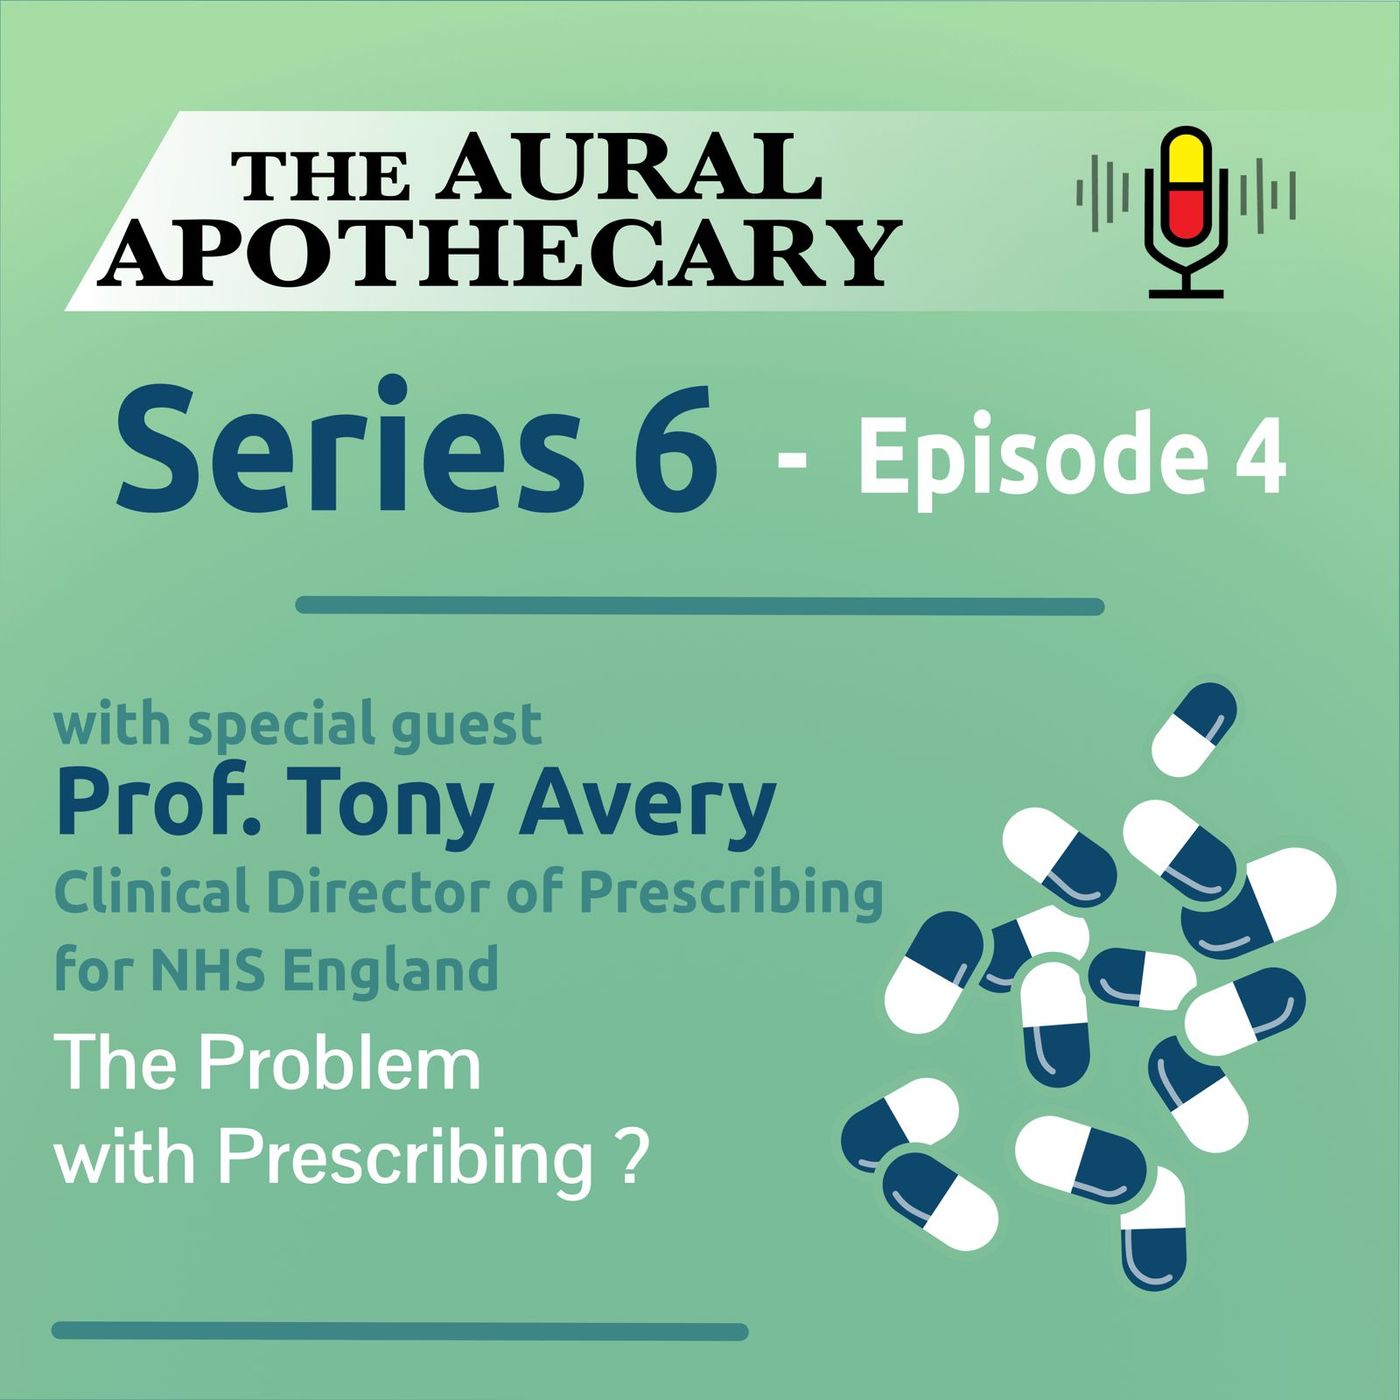 6.4 Professor Tony Avery OBE - The Problem with Prescribing?